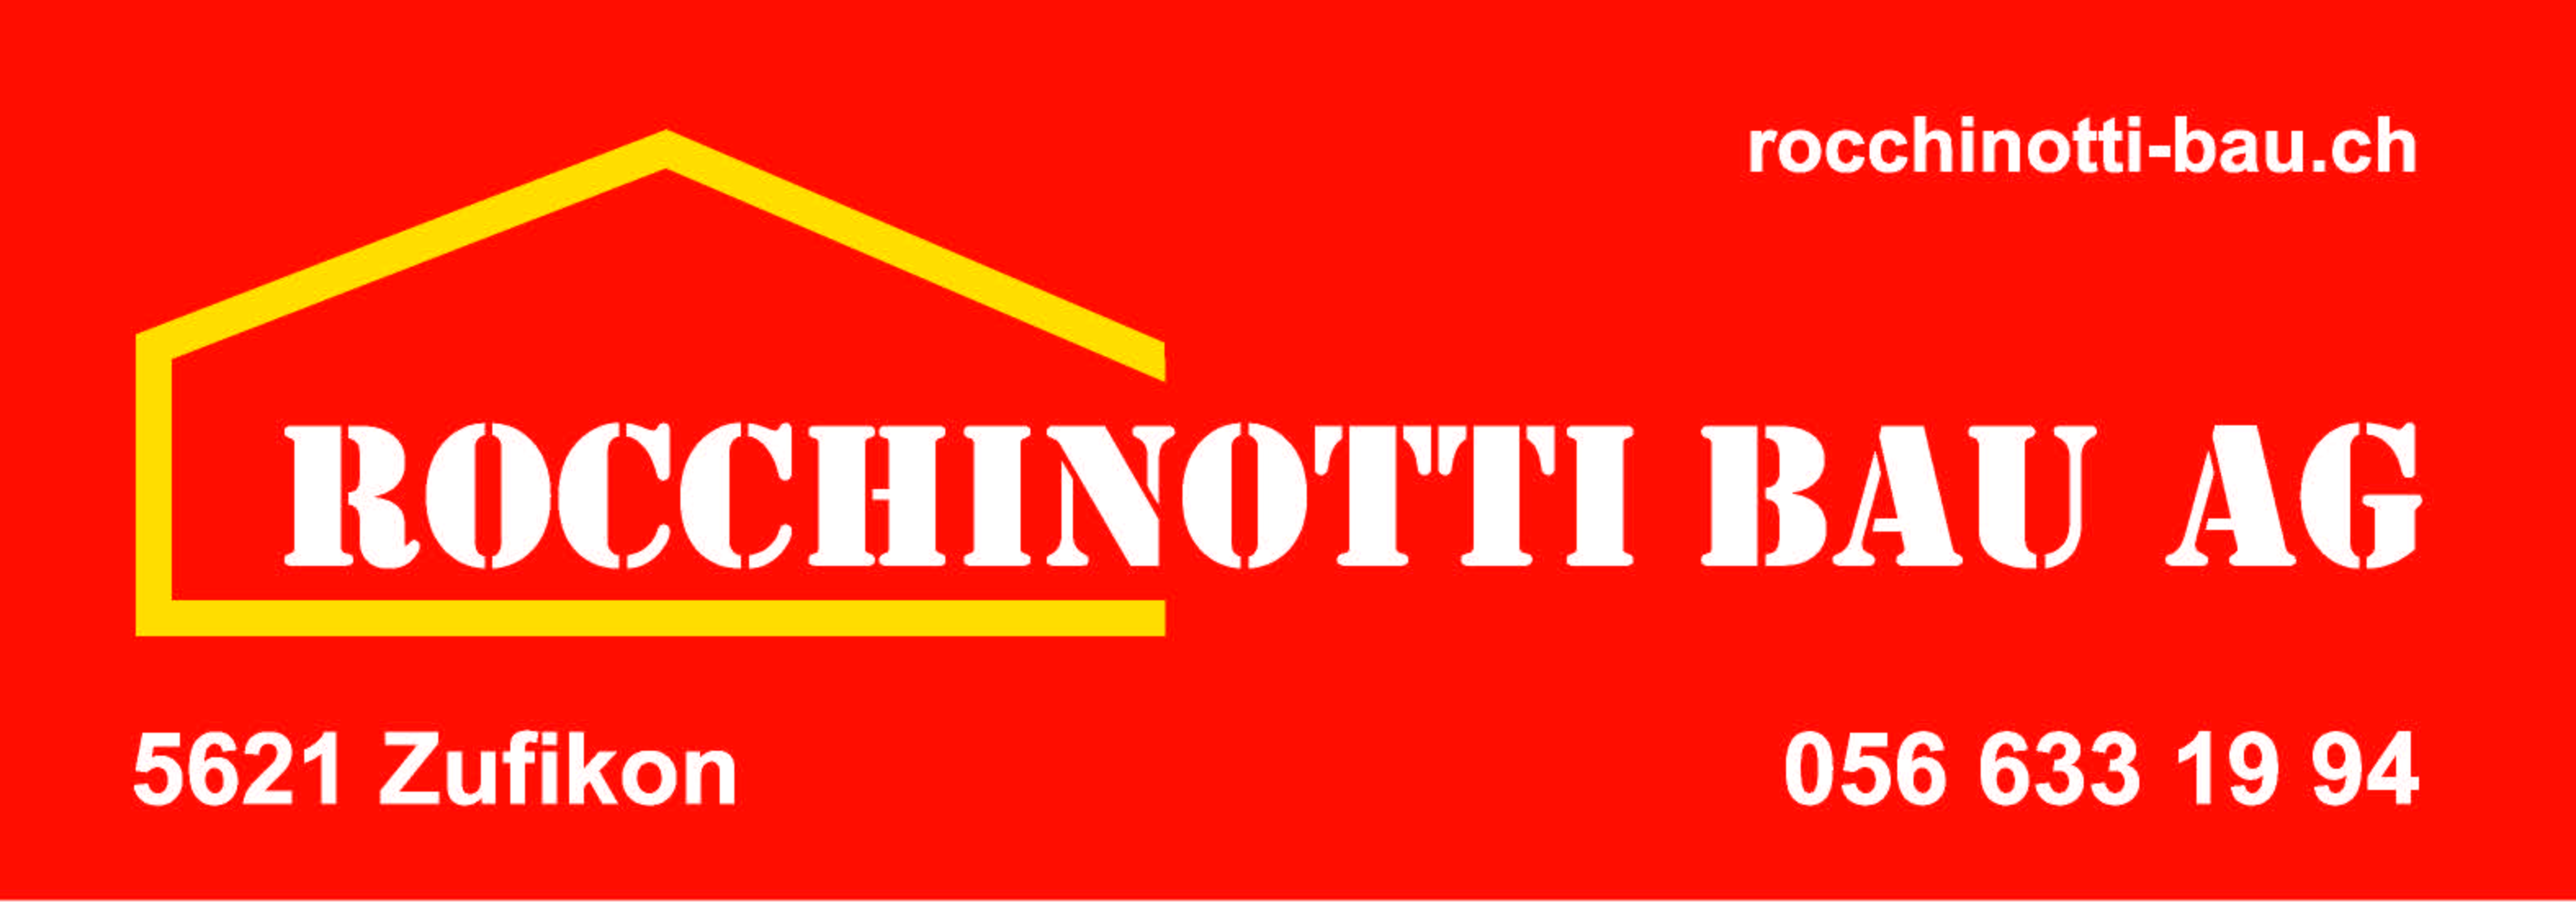 Logo der Rocchinotti Bau AG. Link führt zur Webseite https://www.rocchinotti-bau.ch/ in neuem Tab.